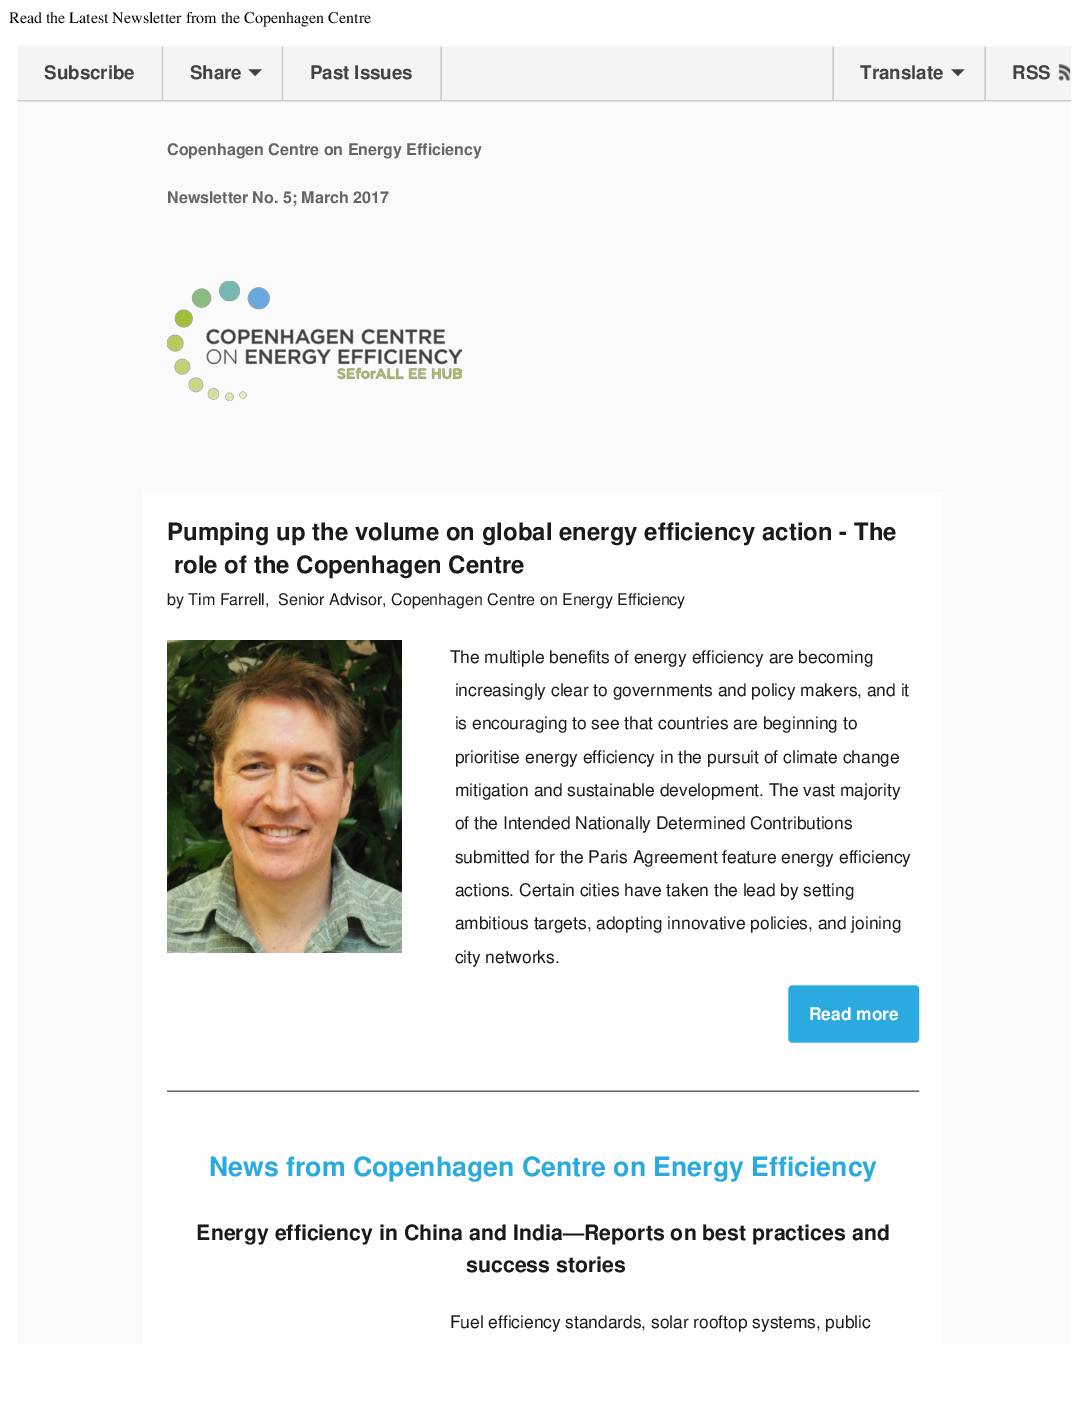 Read Copenhagen Centre on Energy Efficiency’s (C2E2) Fifth Newsletter